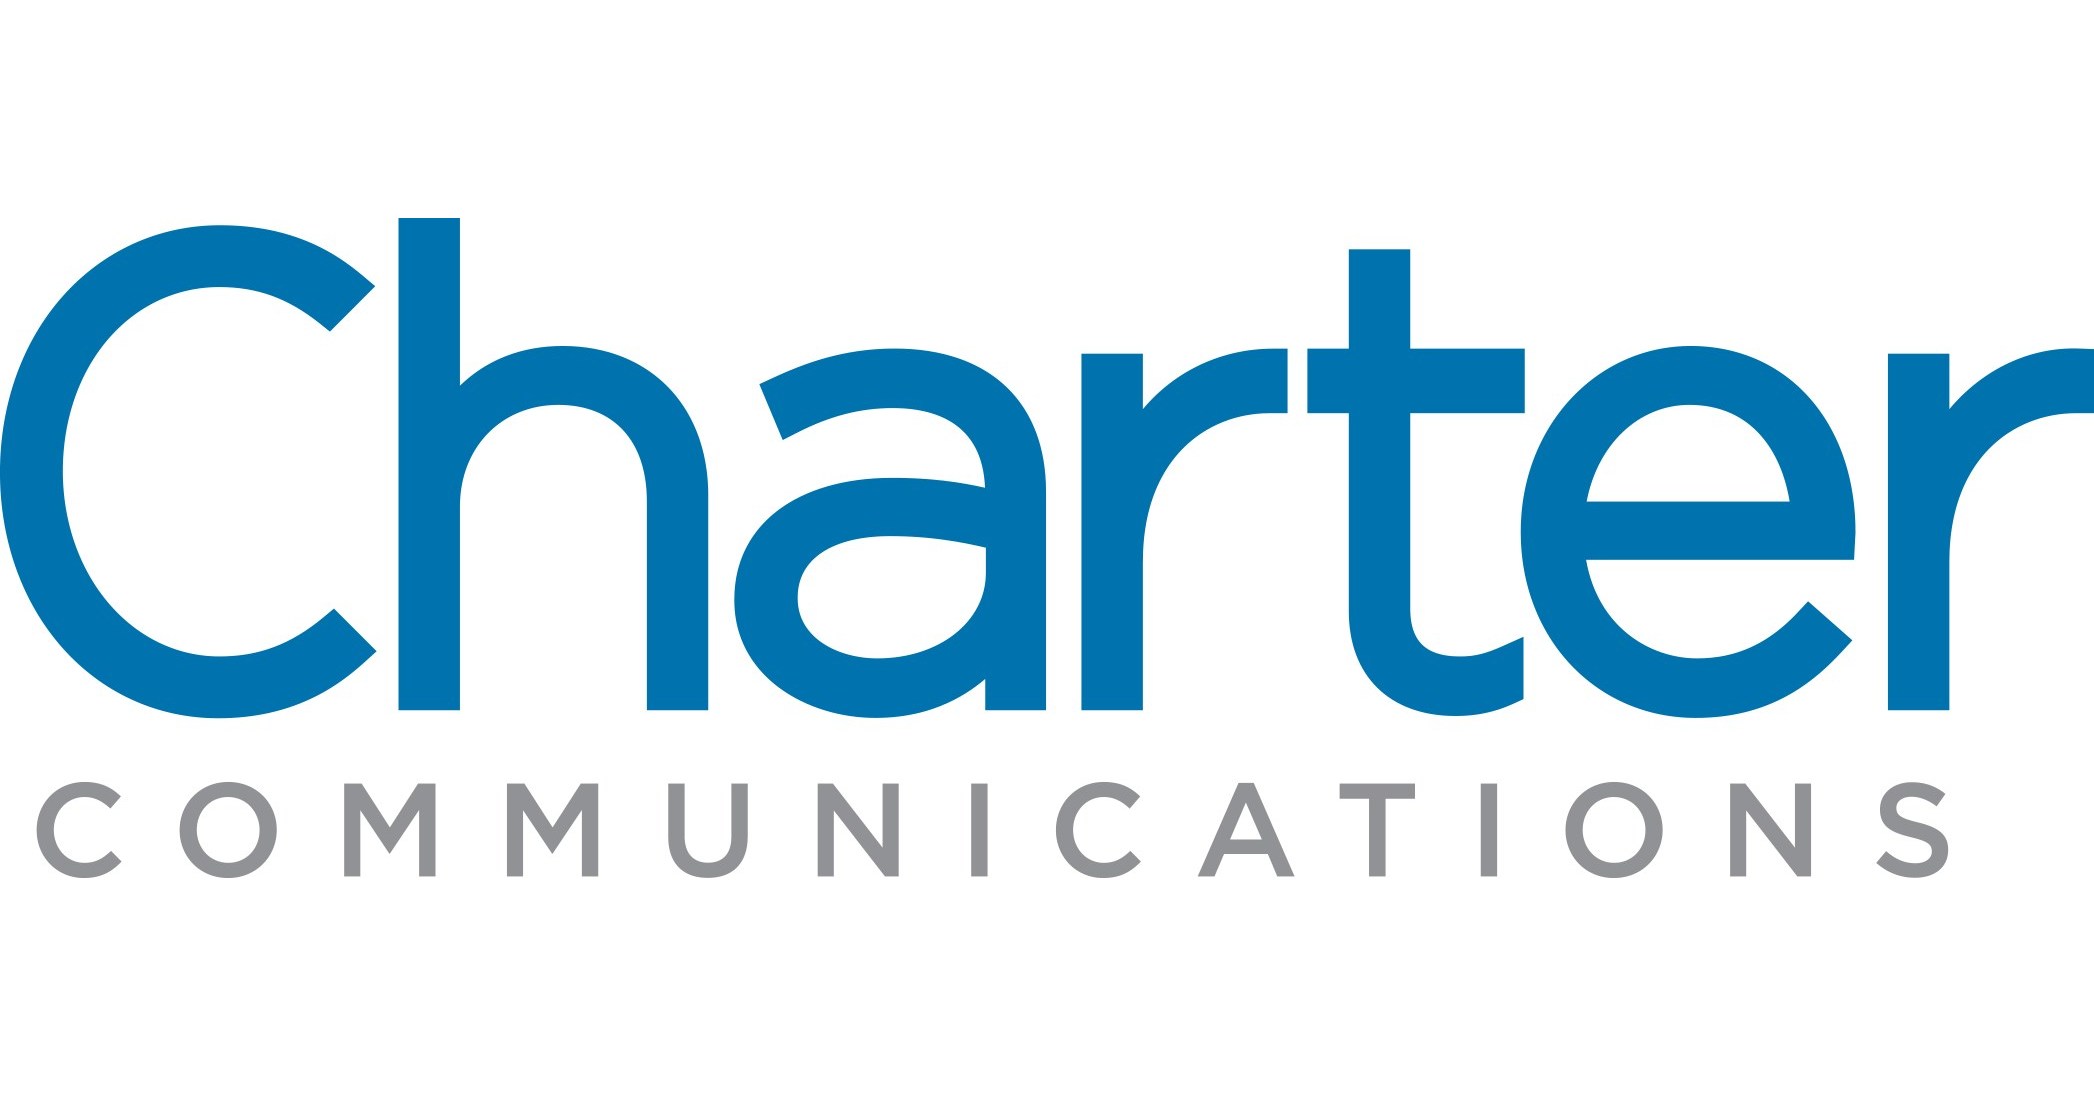 Charter Awards $1 Million 2021 Spectrum Digital Education Grants To 49 Nonprofits Supporting Broadband Literacy